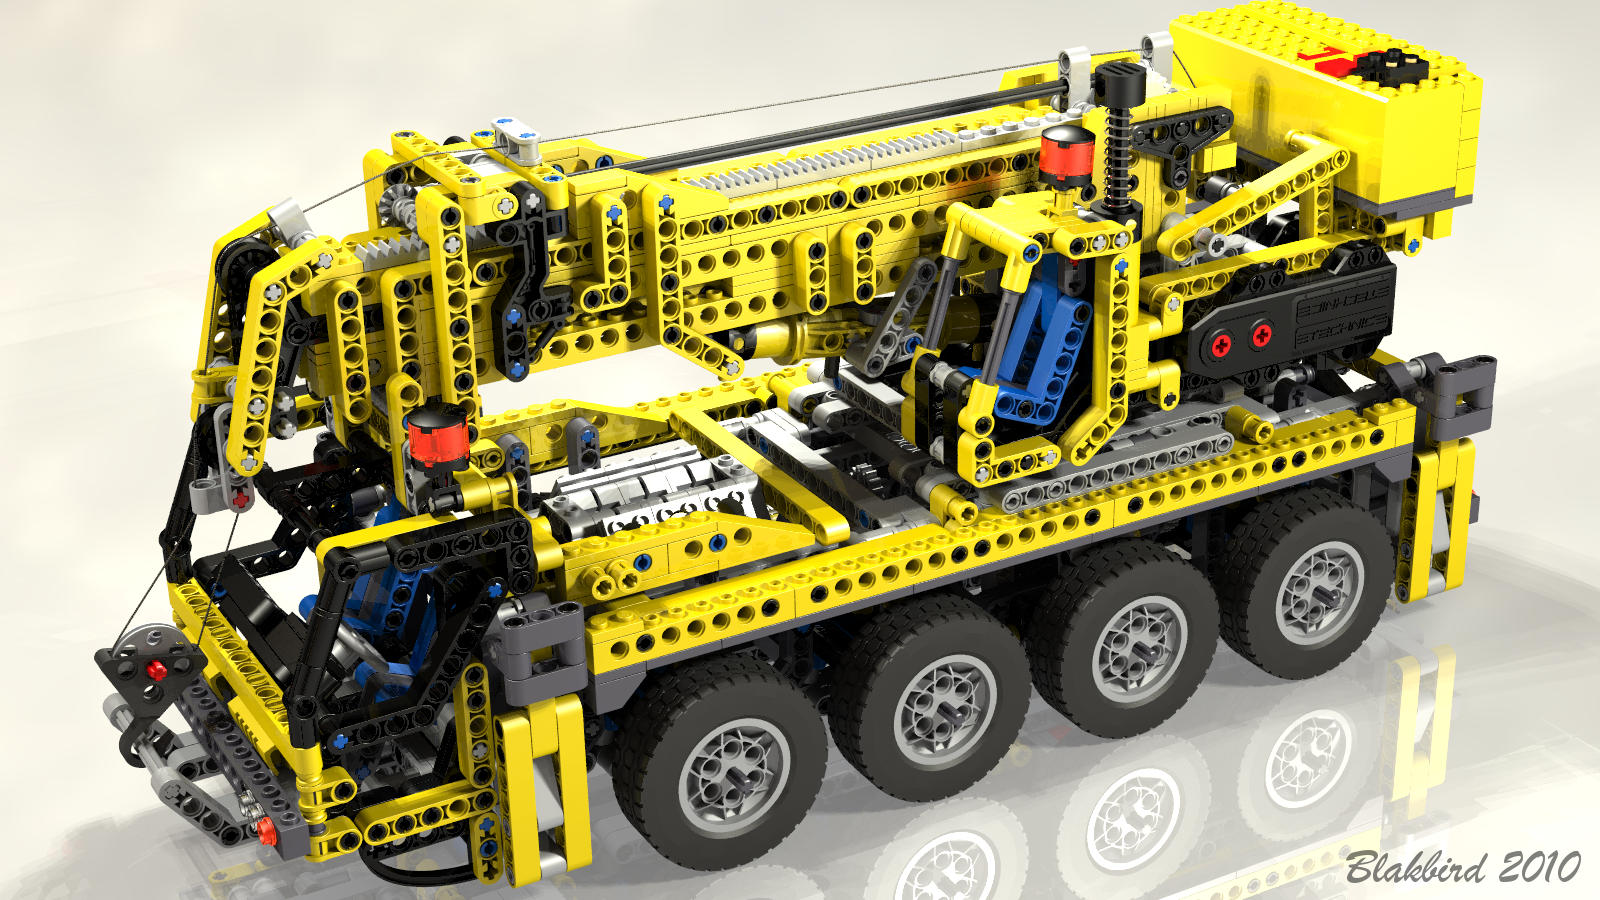 8421 xl building instructions - LEGO Mindstorms, Model Team and Scale Modeling - Eurobricks Forums